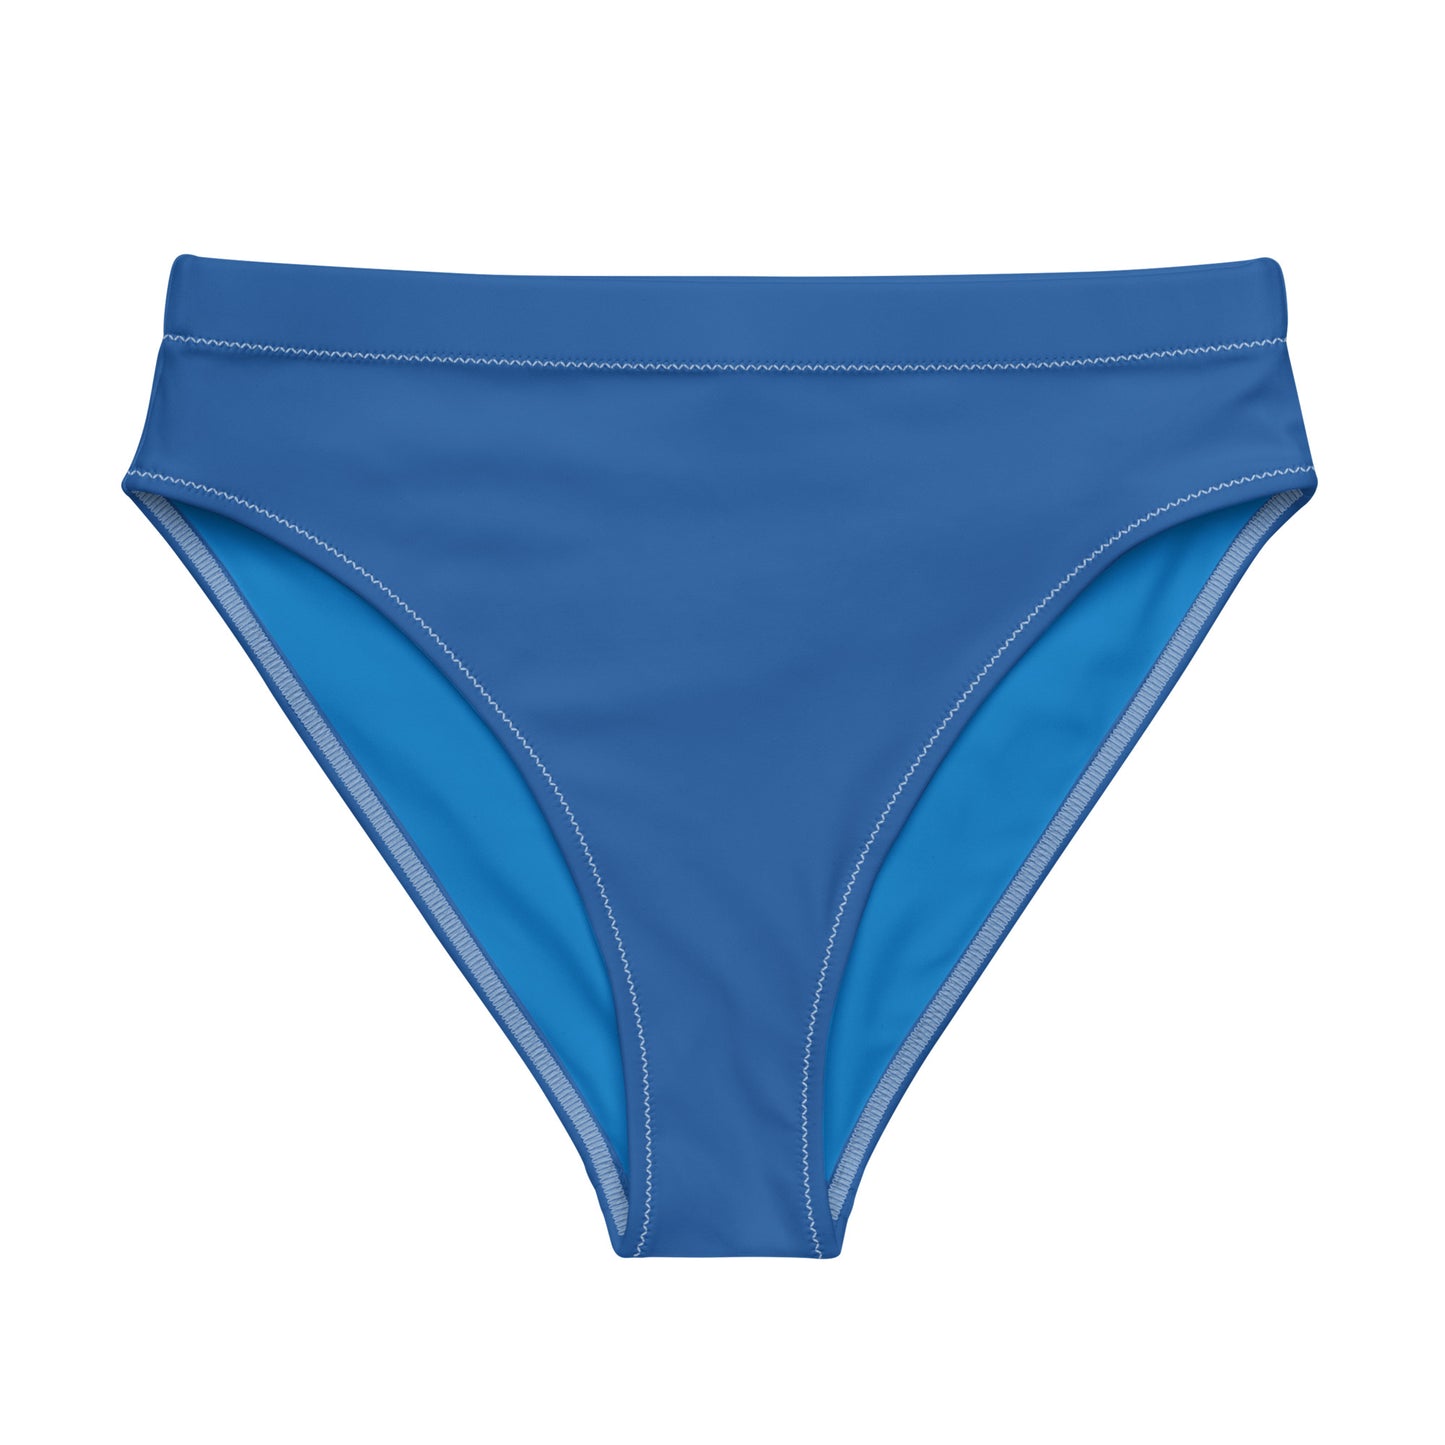 Alpen Tag Solid Blue Recycled Mid-Rise Cheeky Bikini Bottom